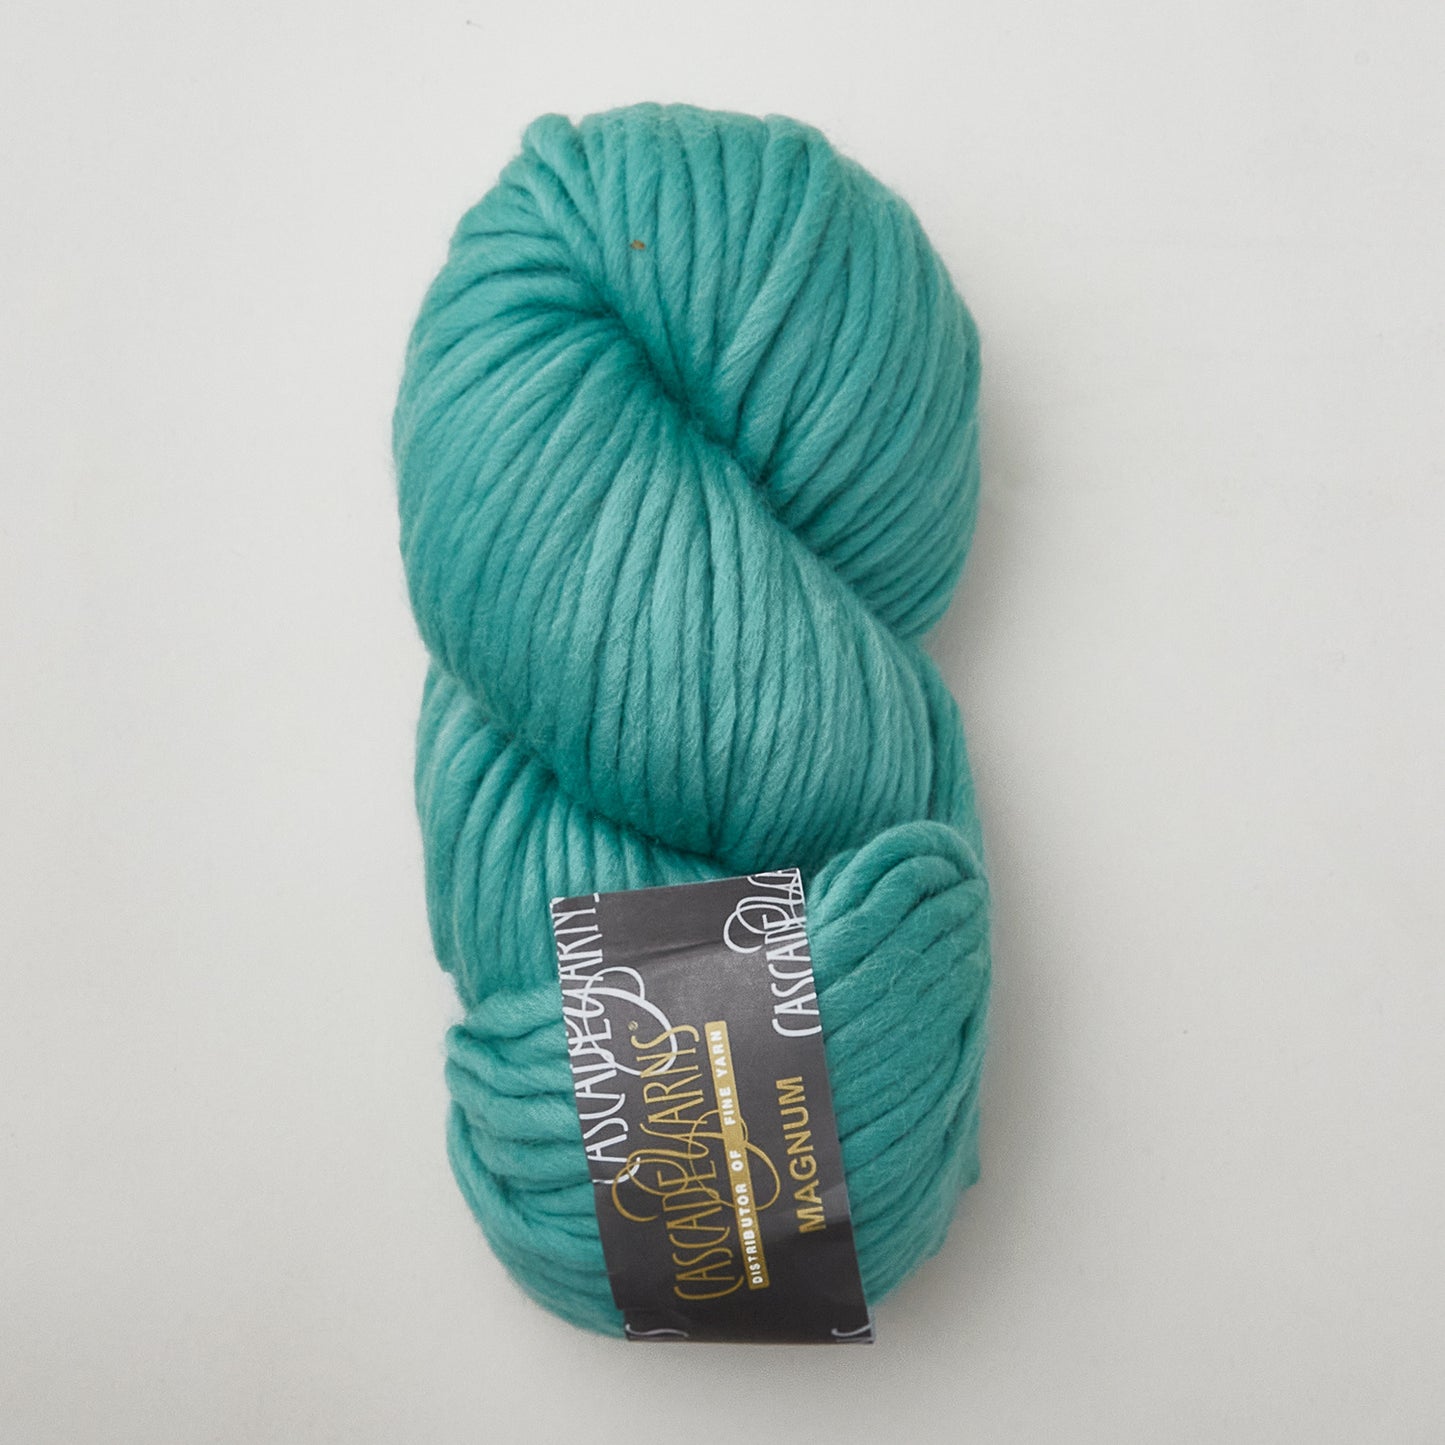 Coles Down Shawl Crochet Kit - Malachite Green Alternative View #1